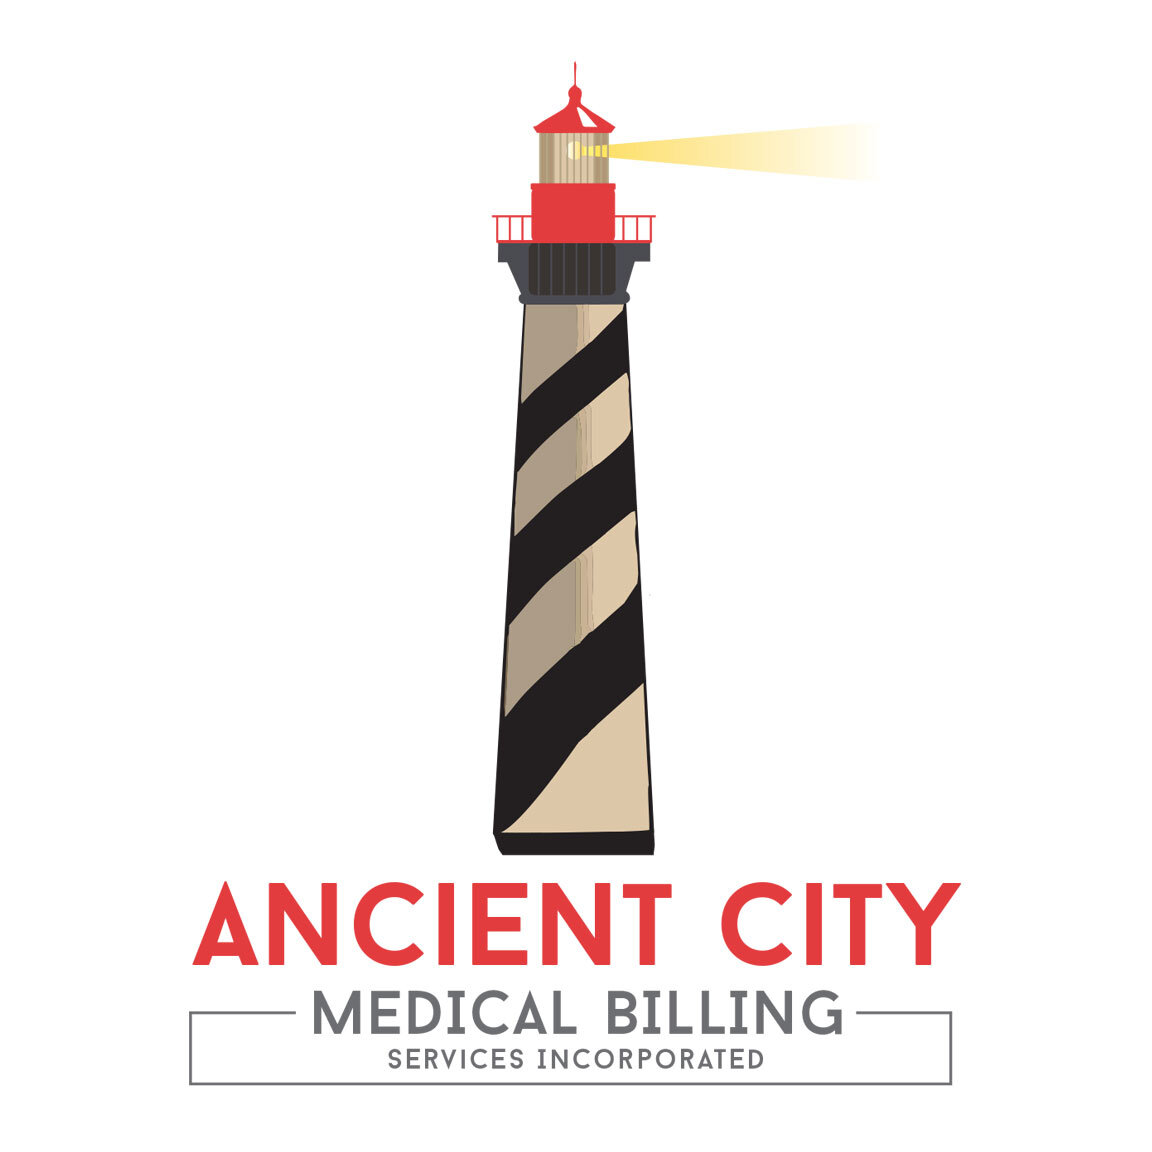 Ancient City Medical Billing Services